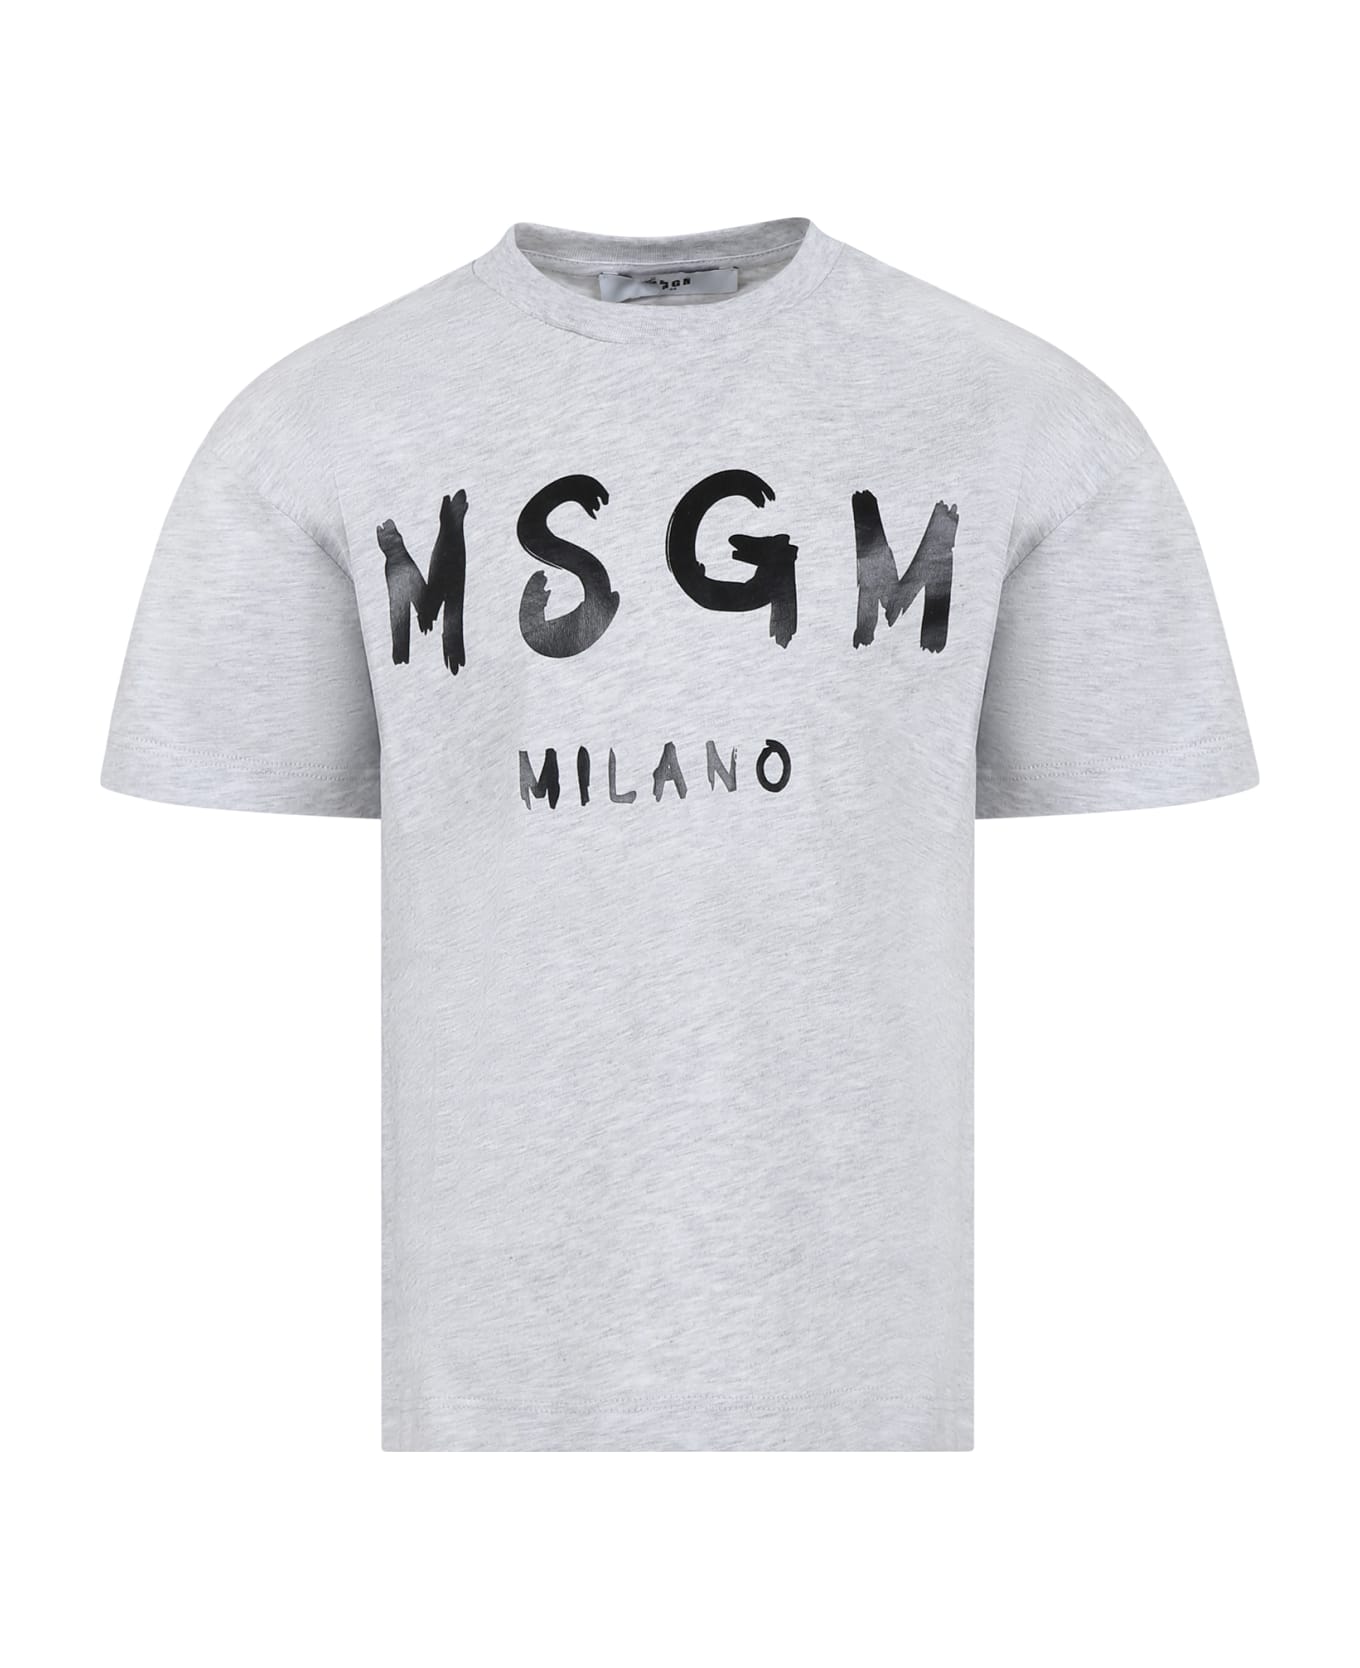 MSGM Grey T-shirt For Kids With Logo - Grigio chiaro